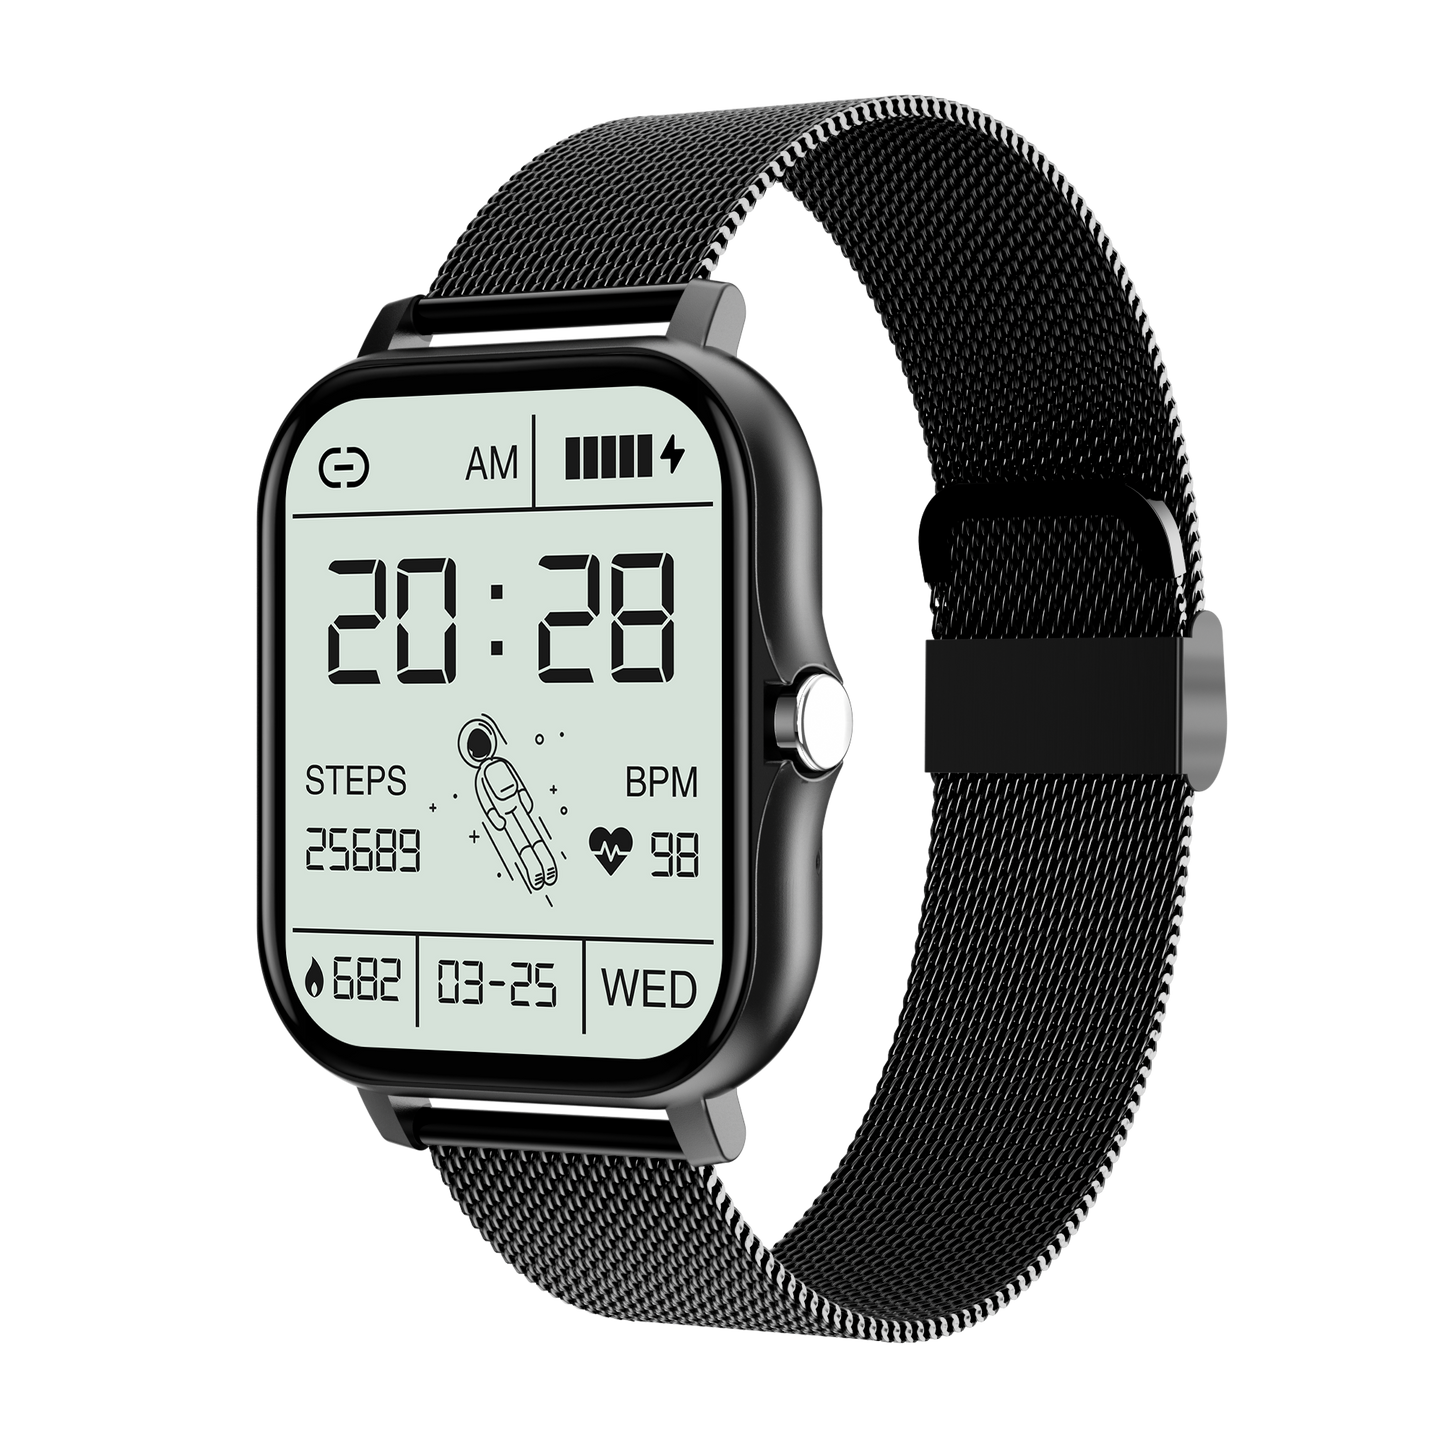 2022 Smart Watch Fitness Clock Sport Heart Rate Monitor Bluetooth Phone Calls - GALAXY PORTAL